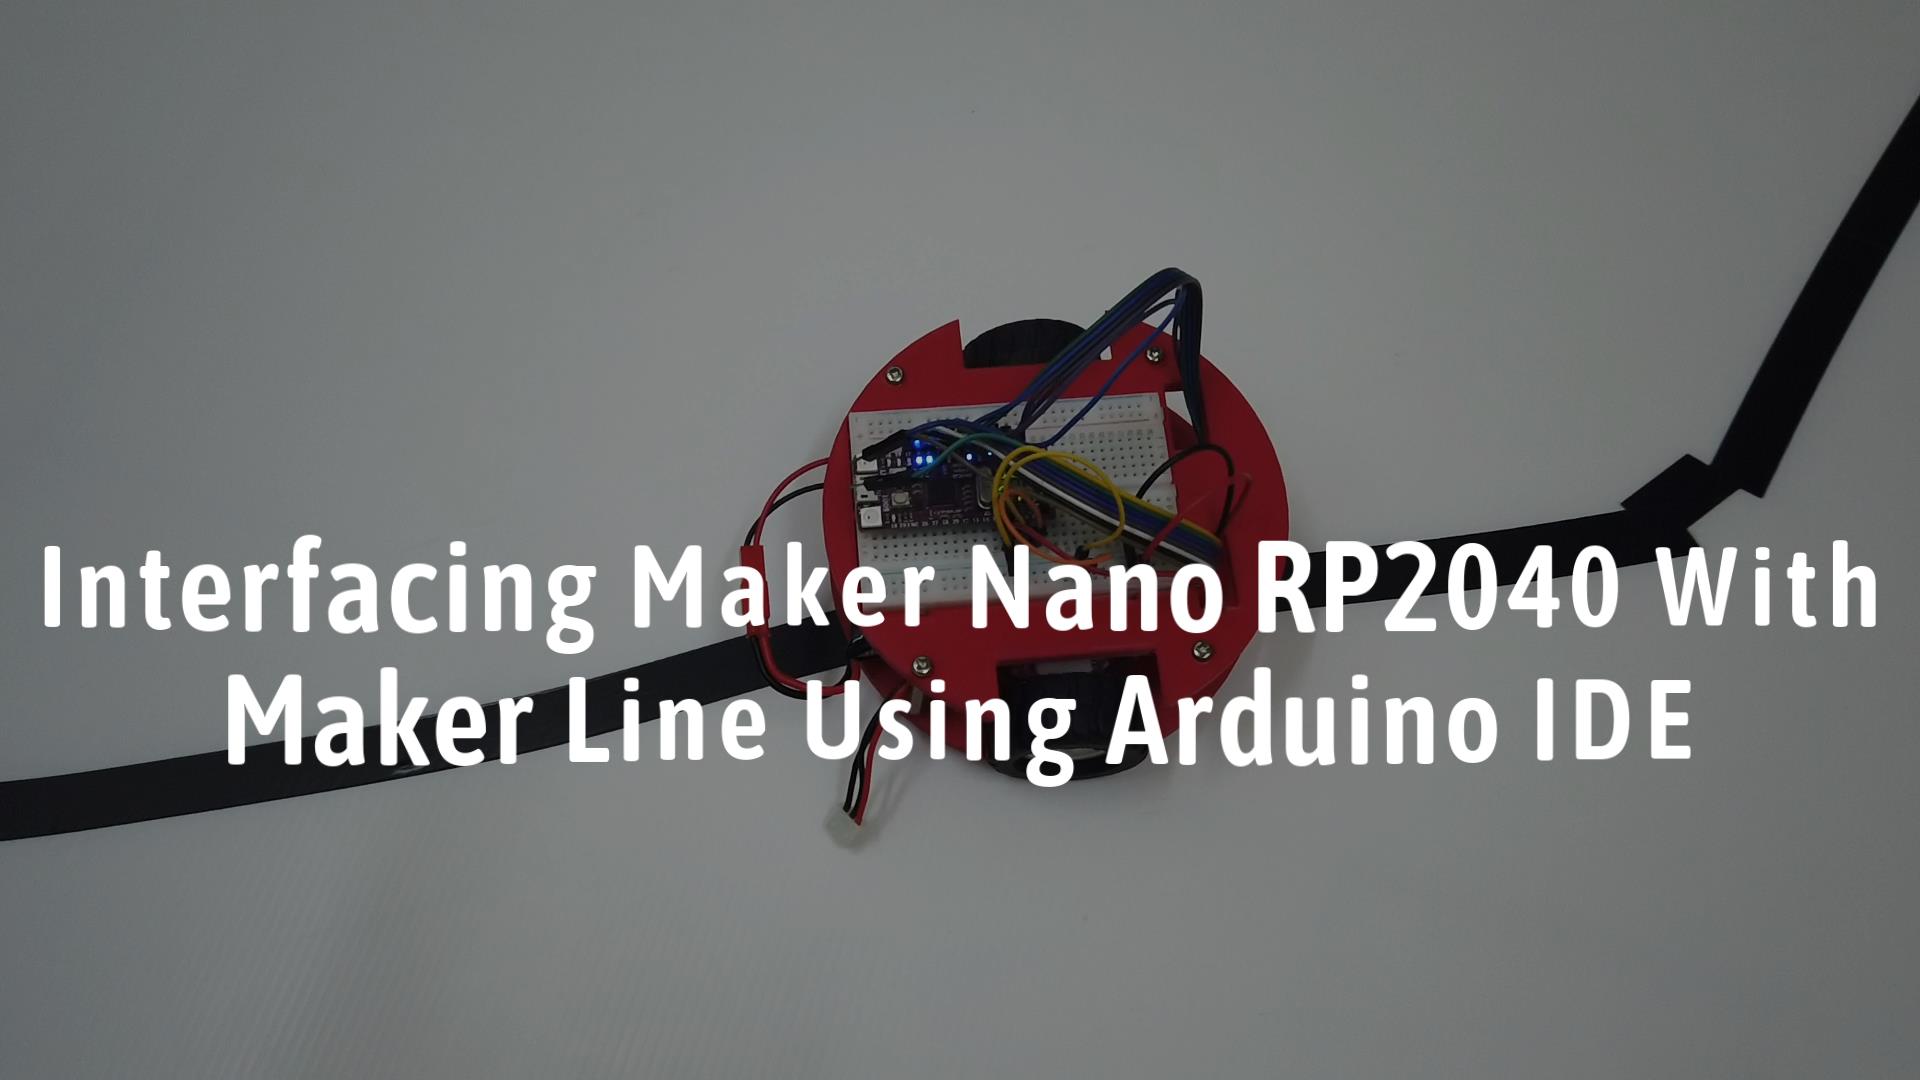 Maker Nano RP2040 Interfacing With Maker Line Using Arduino IDE